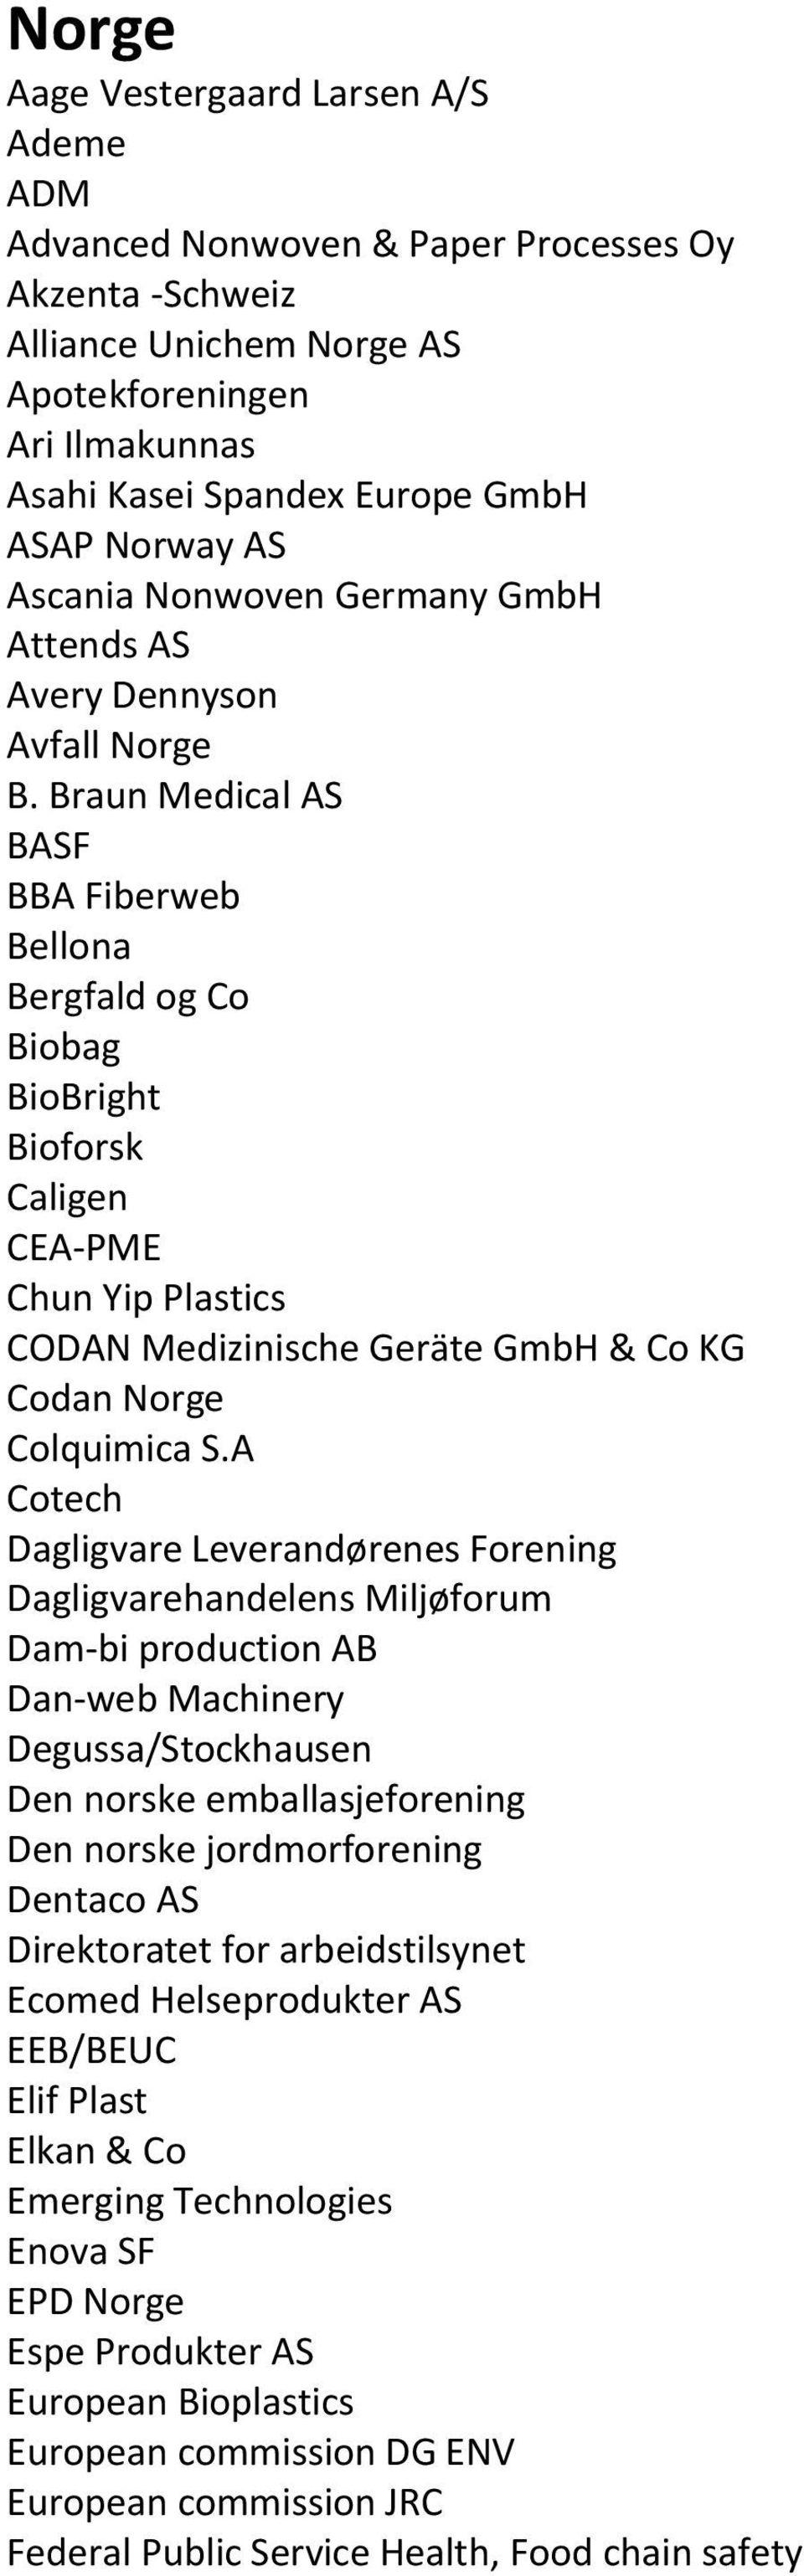 Braun Medical AS BASF BBA Fiberweb Bellona Bergfald og Co Biobag BioBright Bioforsk Caligen CEA-PME Chun Yip Plastics CODAN Medizinische Geräte GmbH & Co KG Codan Norge Colquimica S.